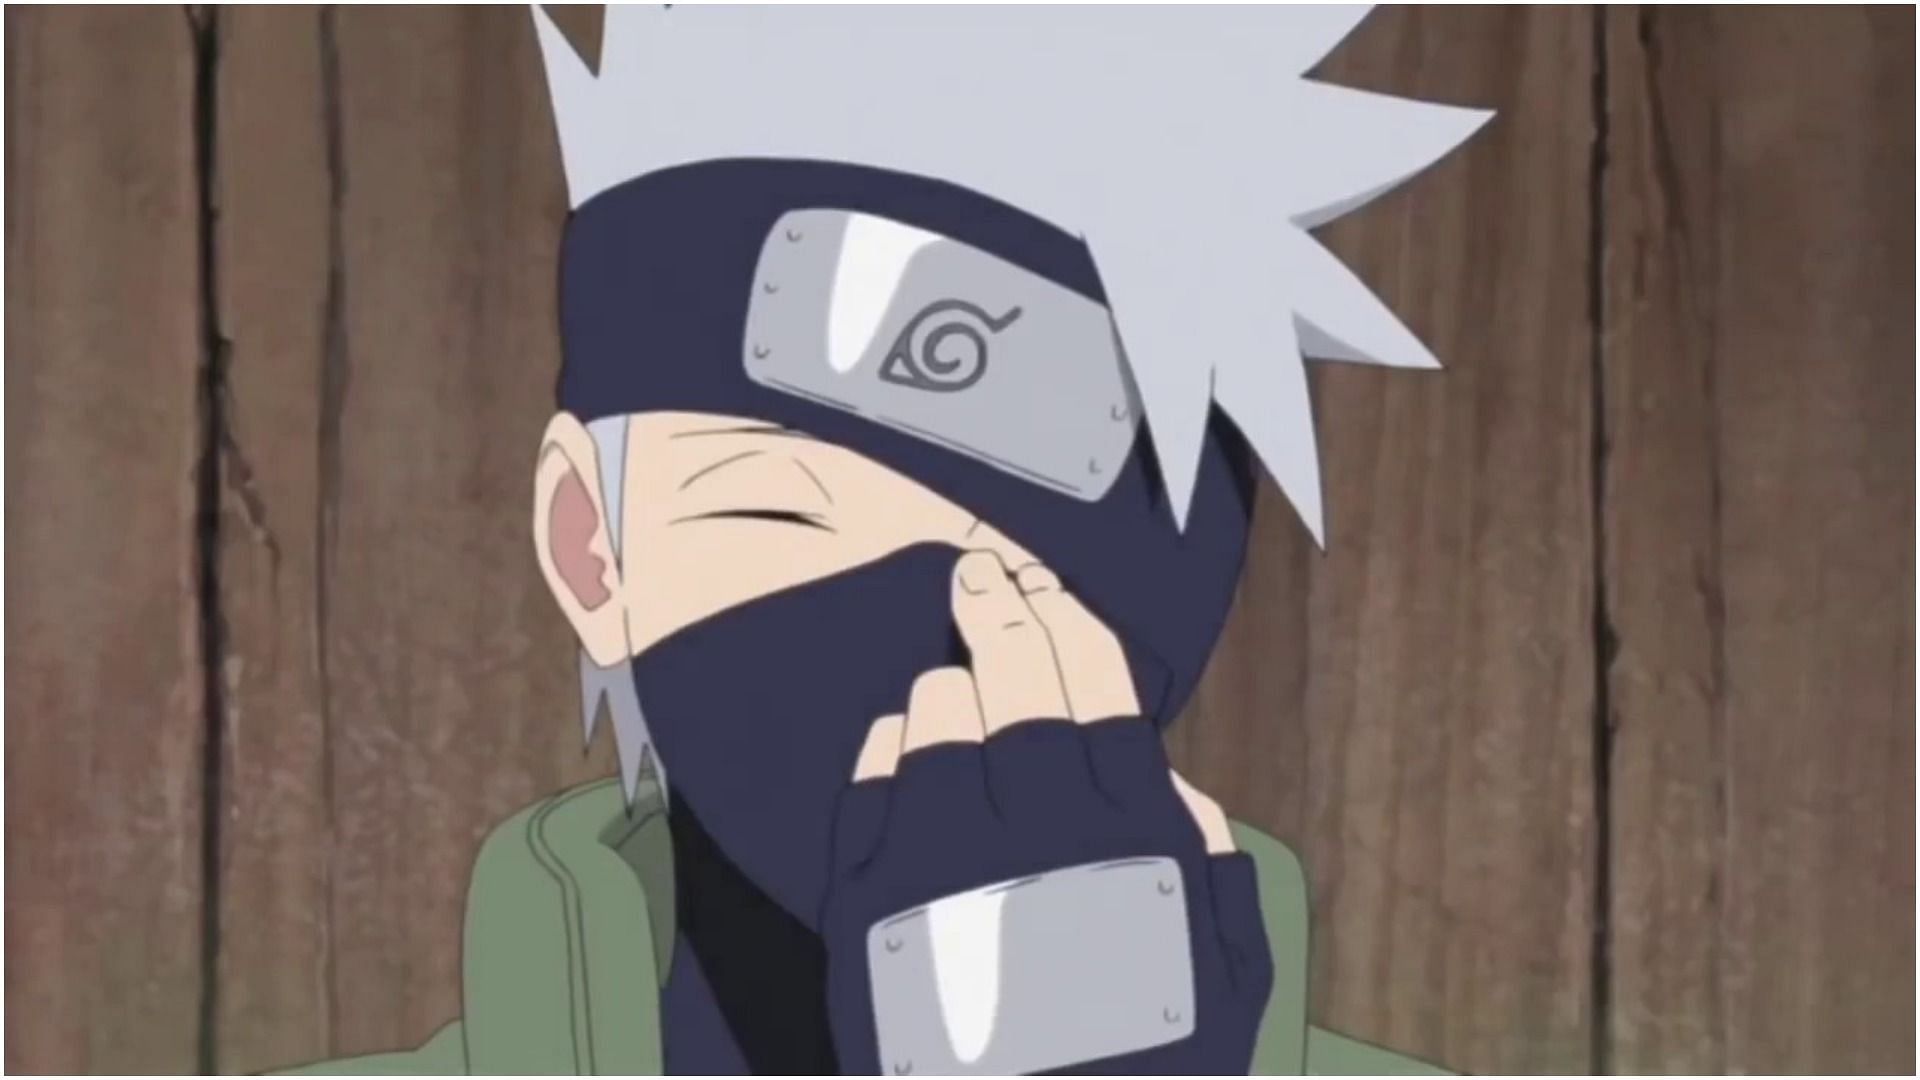 Did Kakashi ever remove his mask during Naruto: Shippuden?